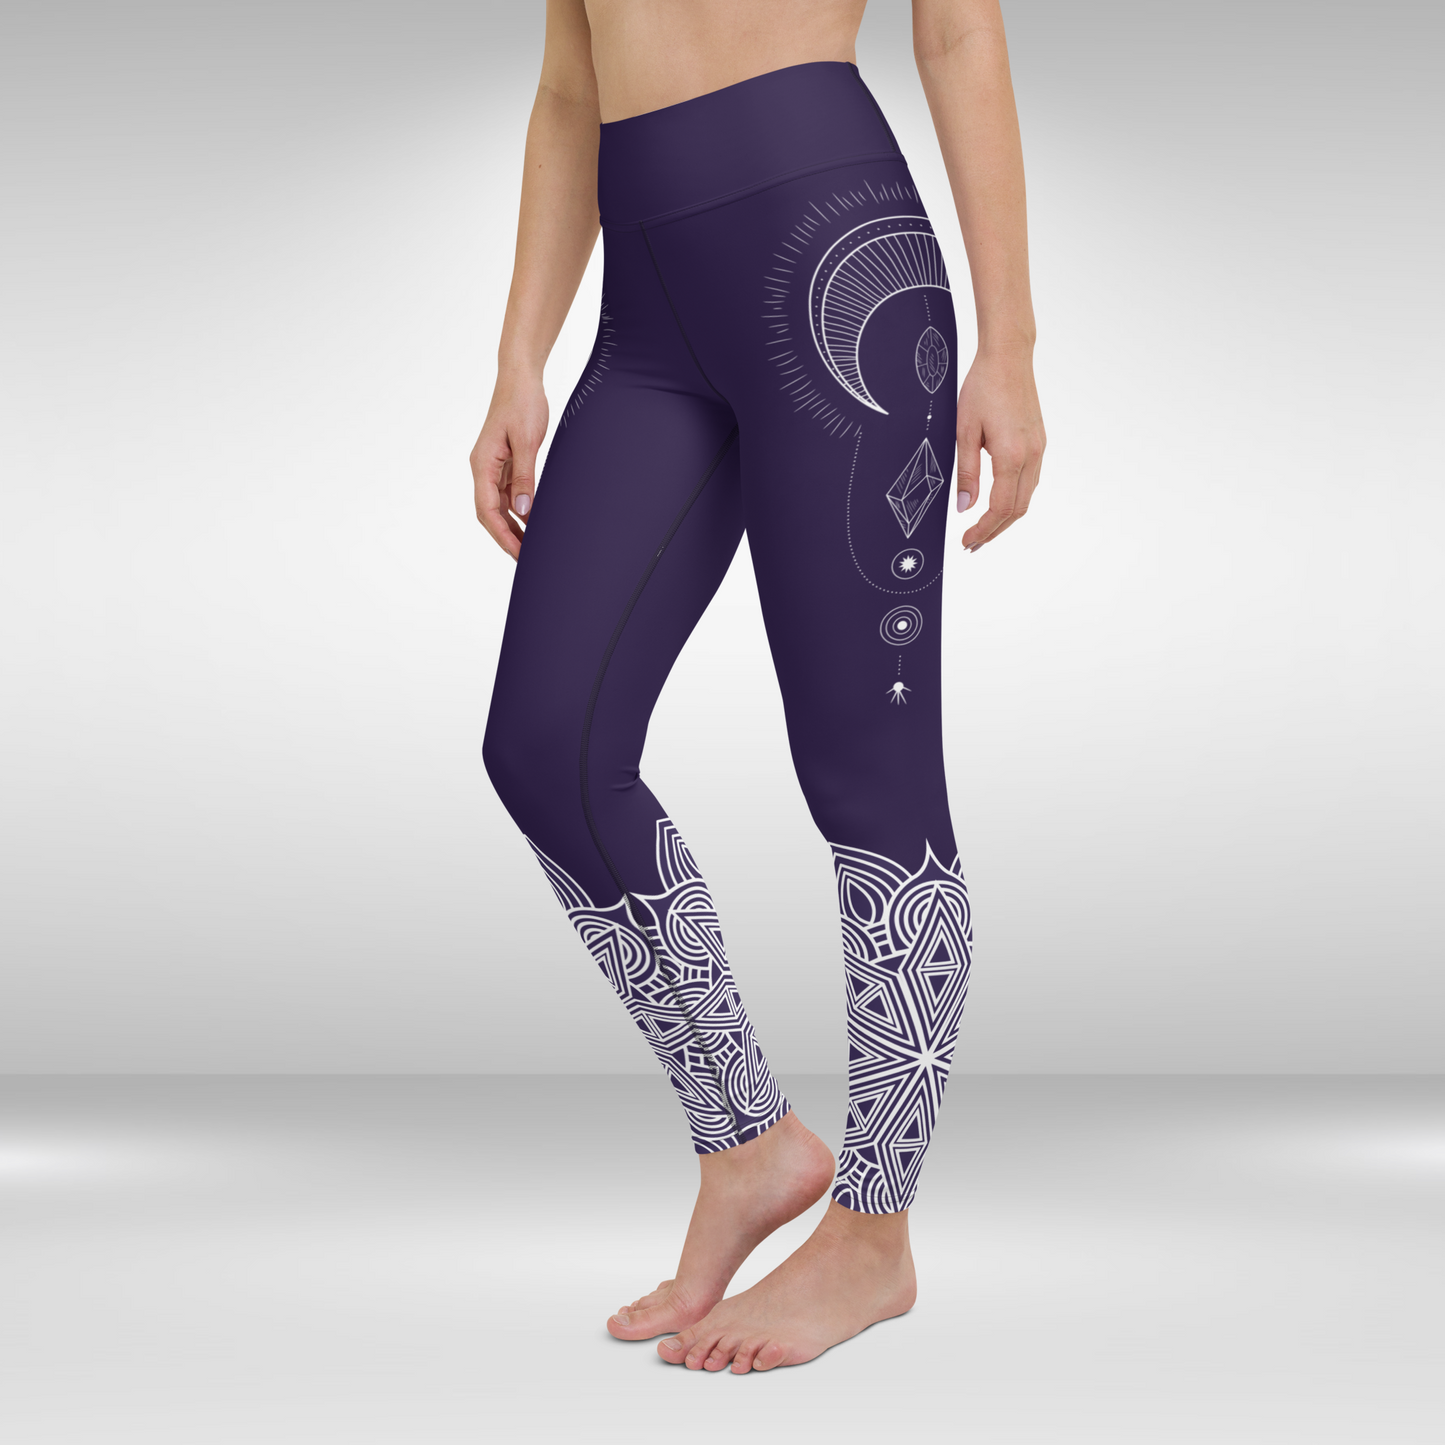 Women Yoga Legging - Purple and White Mandala Print